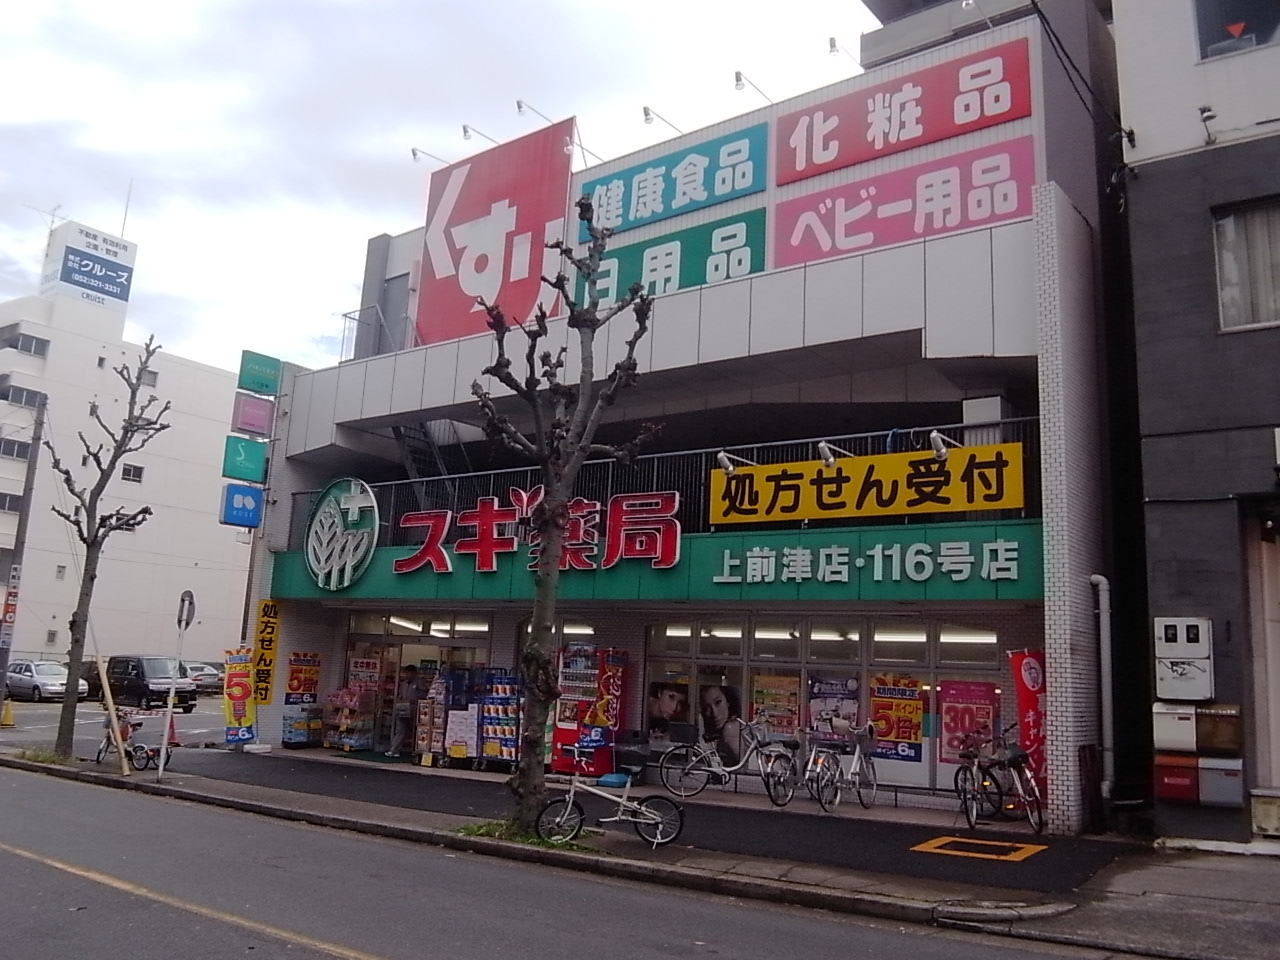 Dorakkusutoa. Cedar pharmacy Kamimaezu shop 160m until (drugstore)